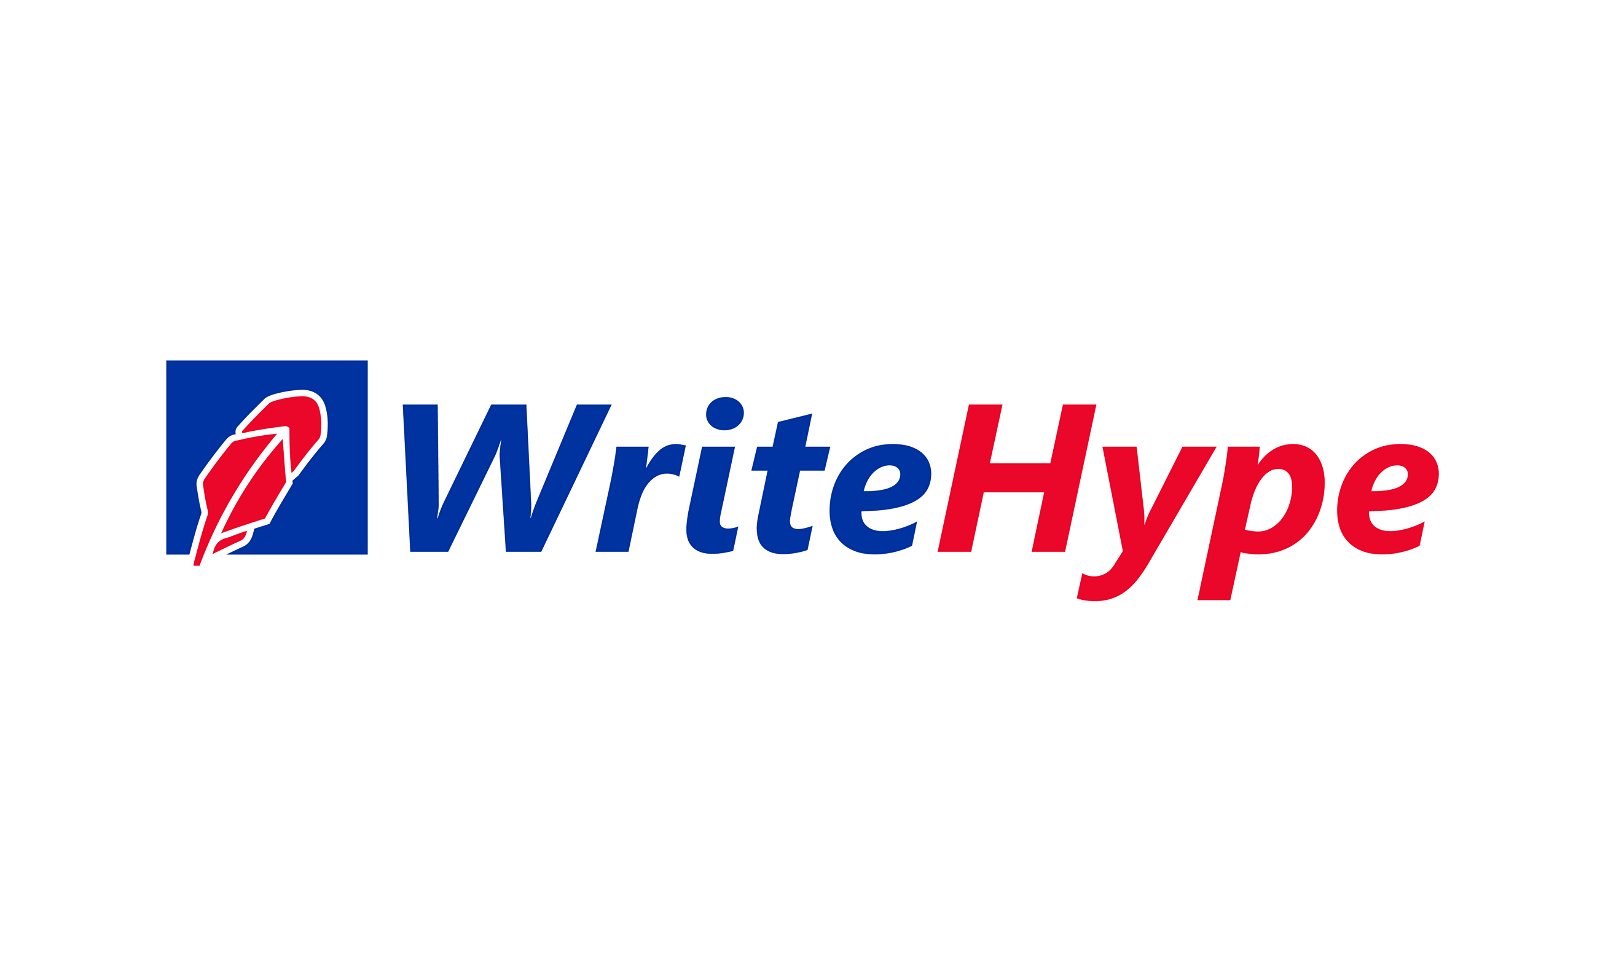 WriteHype.com - Creative brandable domain for sale